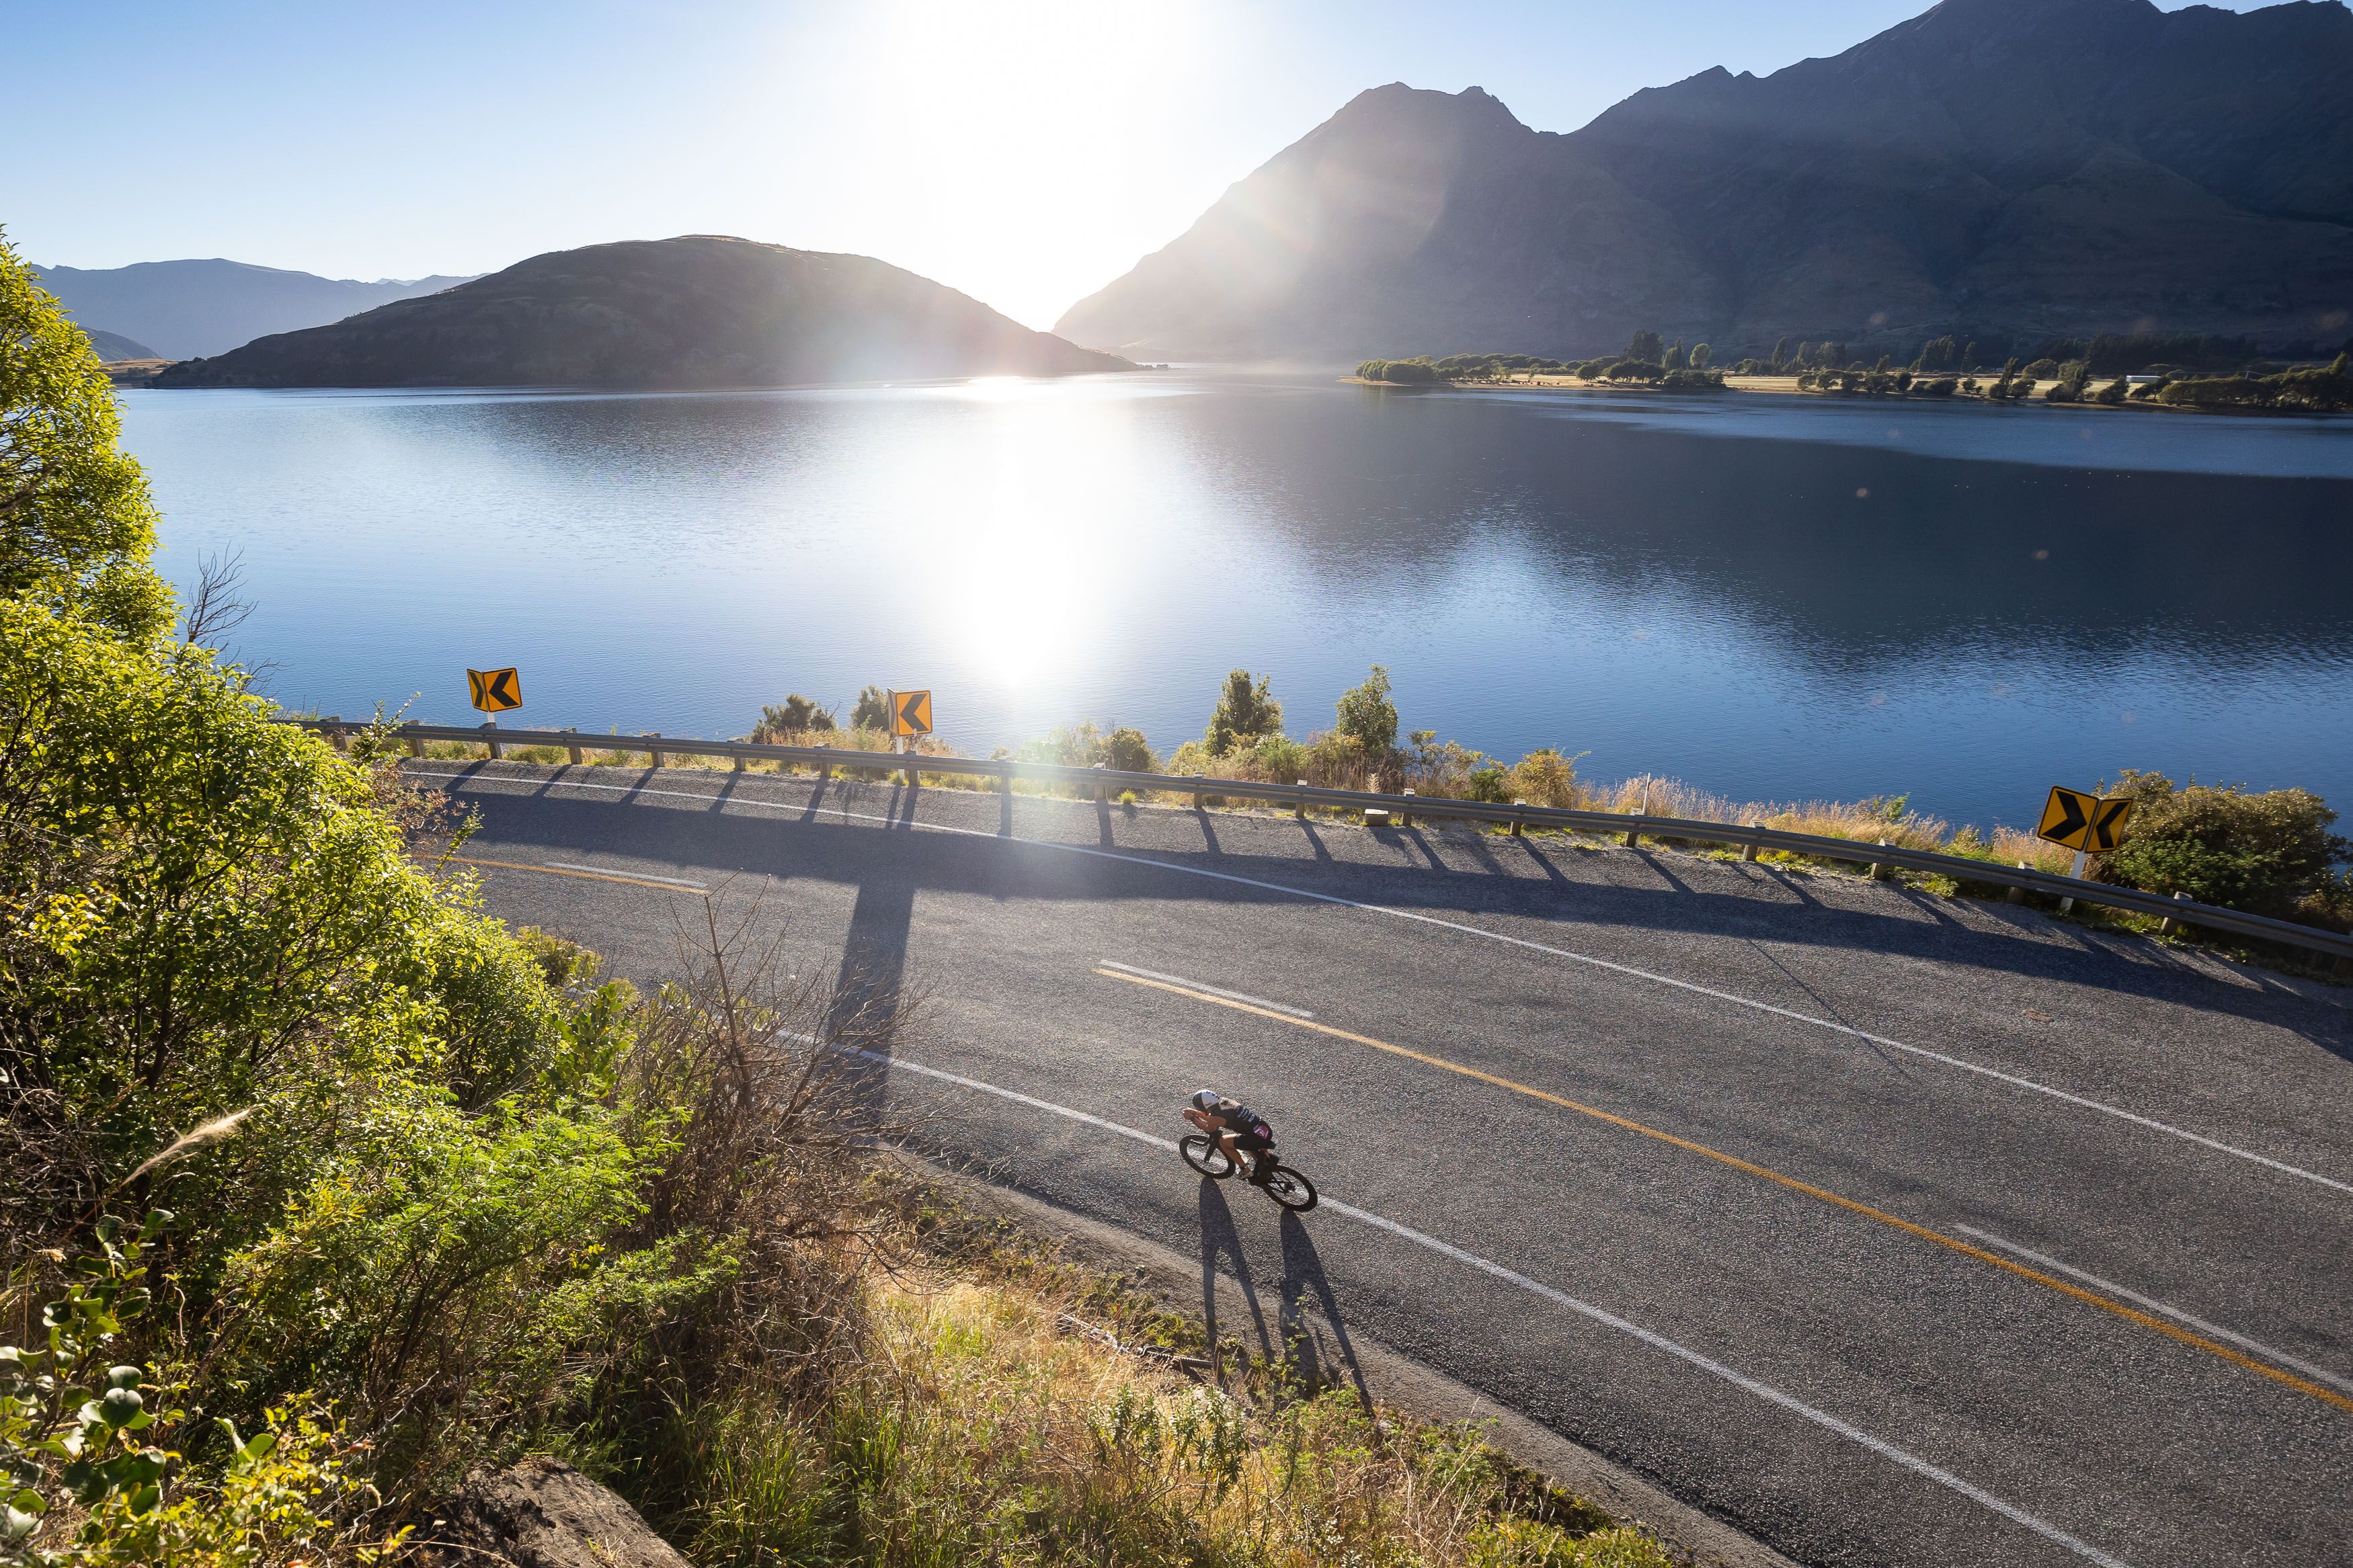 Triathlon cyclist riding on road beside lake